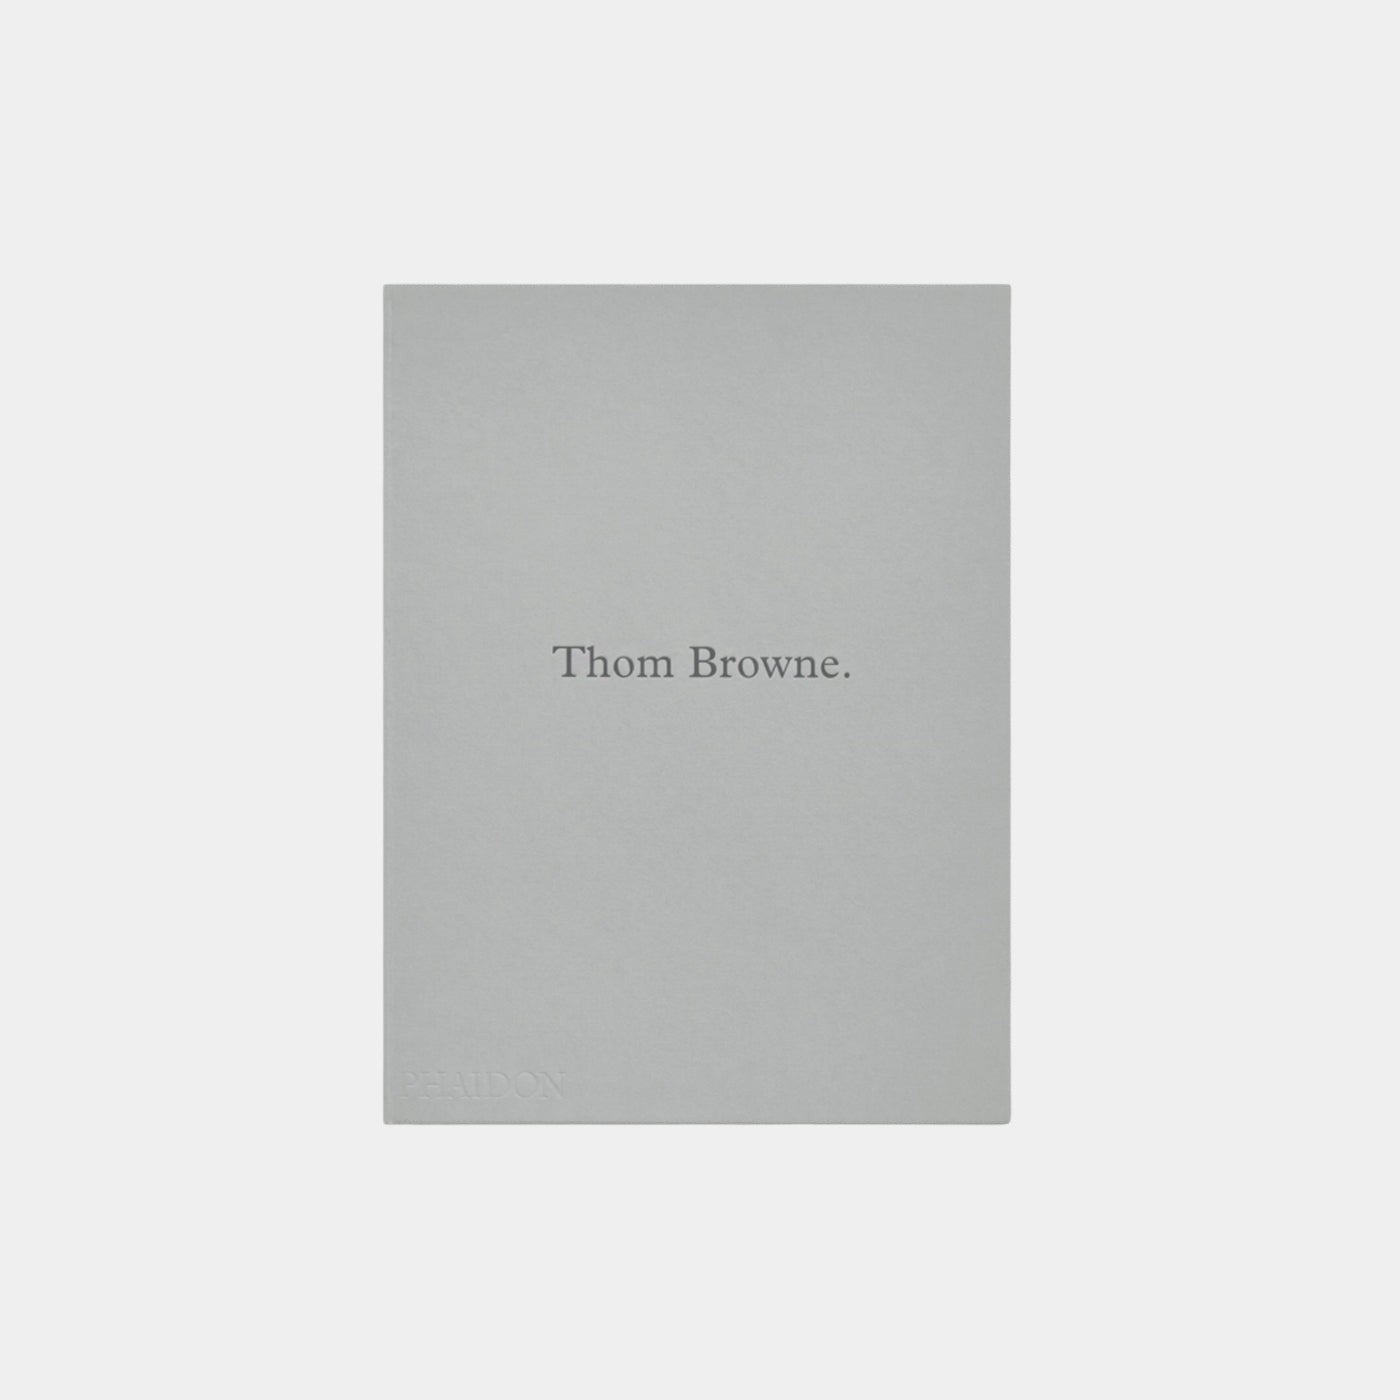 Thoma Browne’a